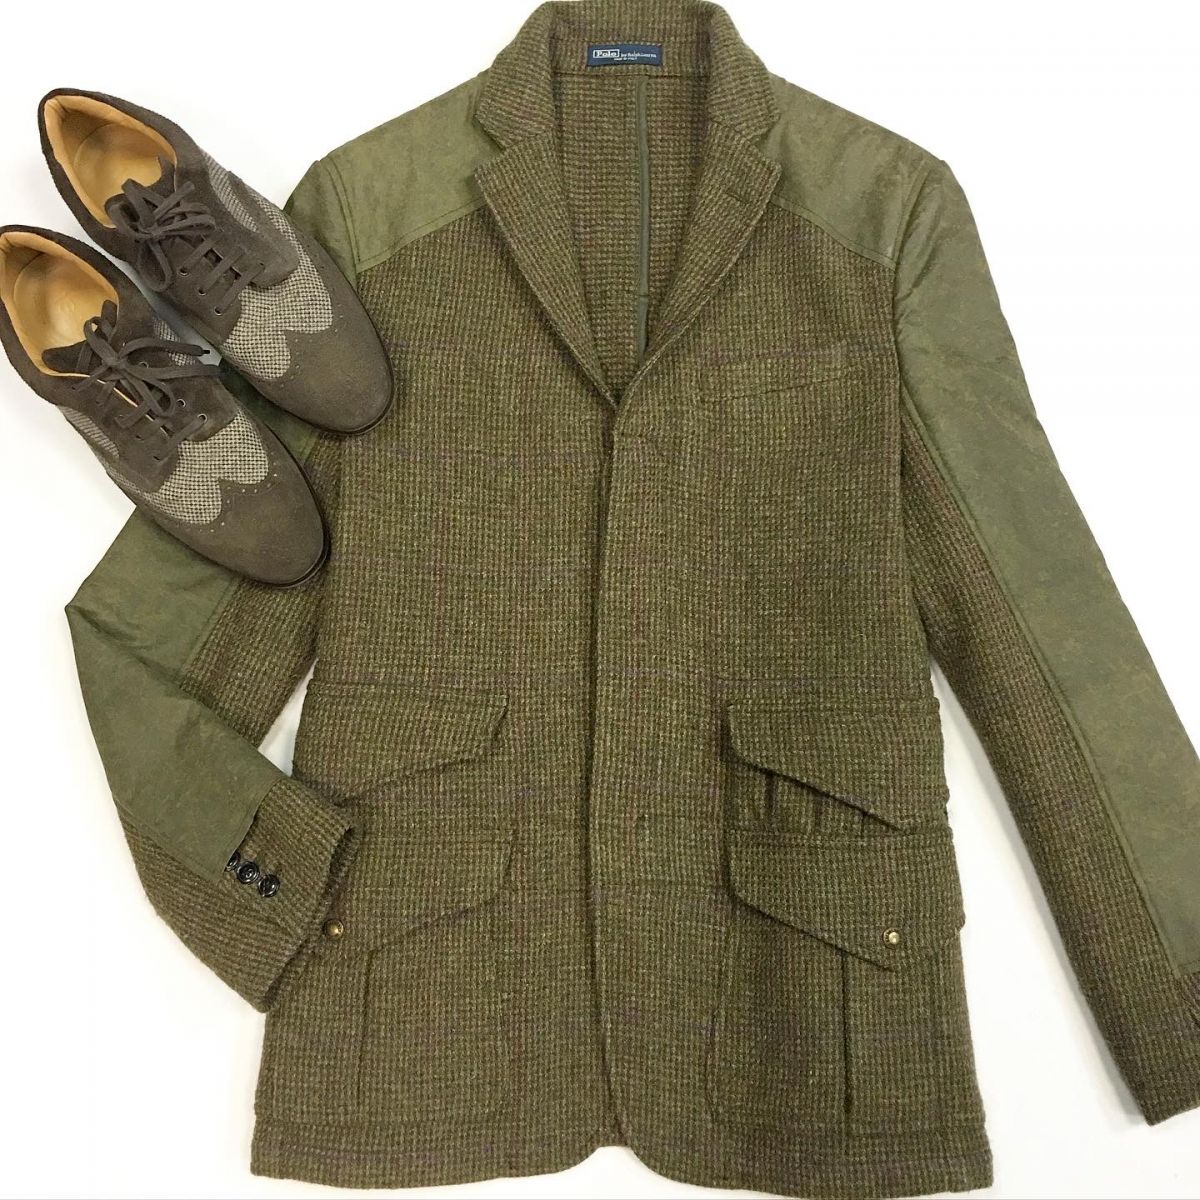 #mechtamen  Пиджак/куртка Ralphlauren  размер 40 цена 10 770 руб Ботинки Исса размер 44 цена 10 770 руб